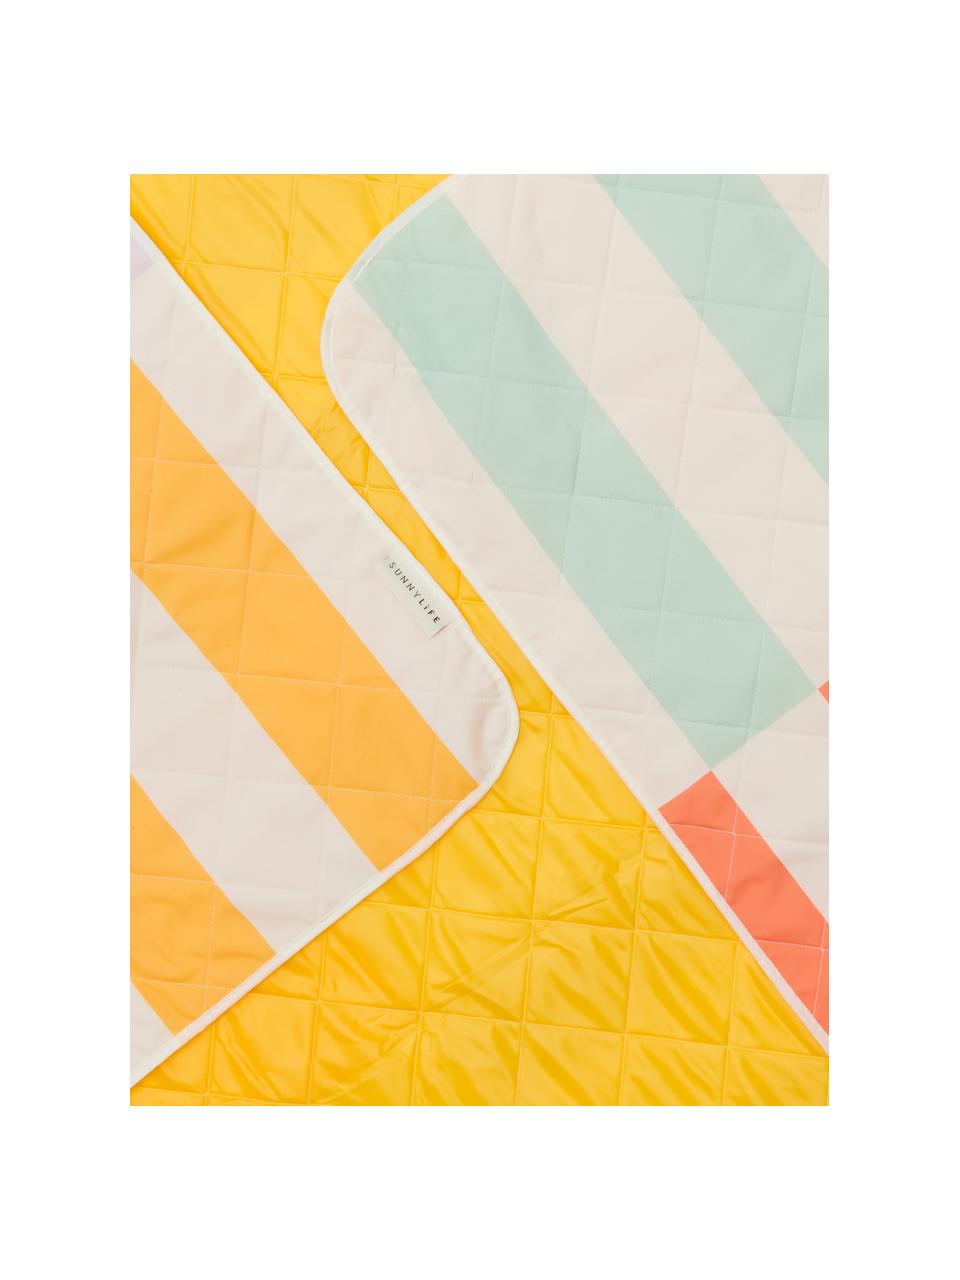 Strand- en picknickkleed Rio Sun, 100% polyester, Meerkleurig, patroon, B 140 x L 175 cm